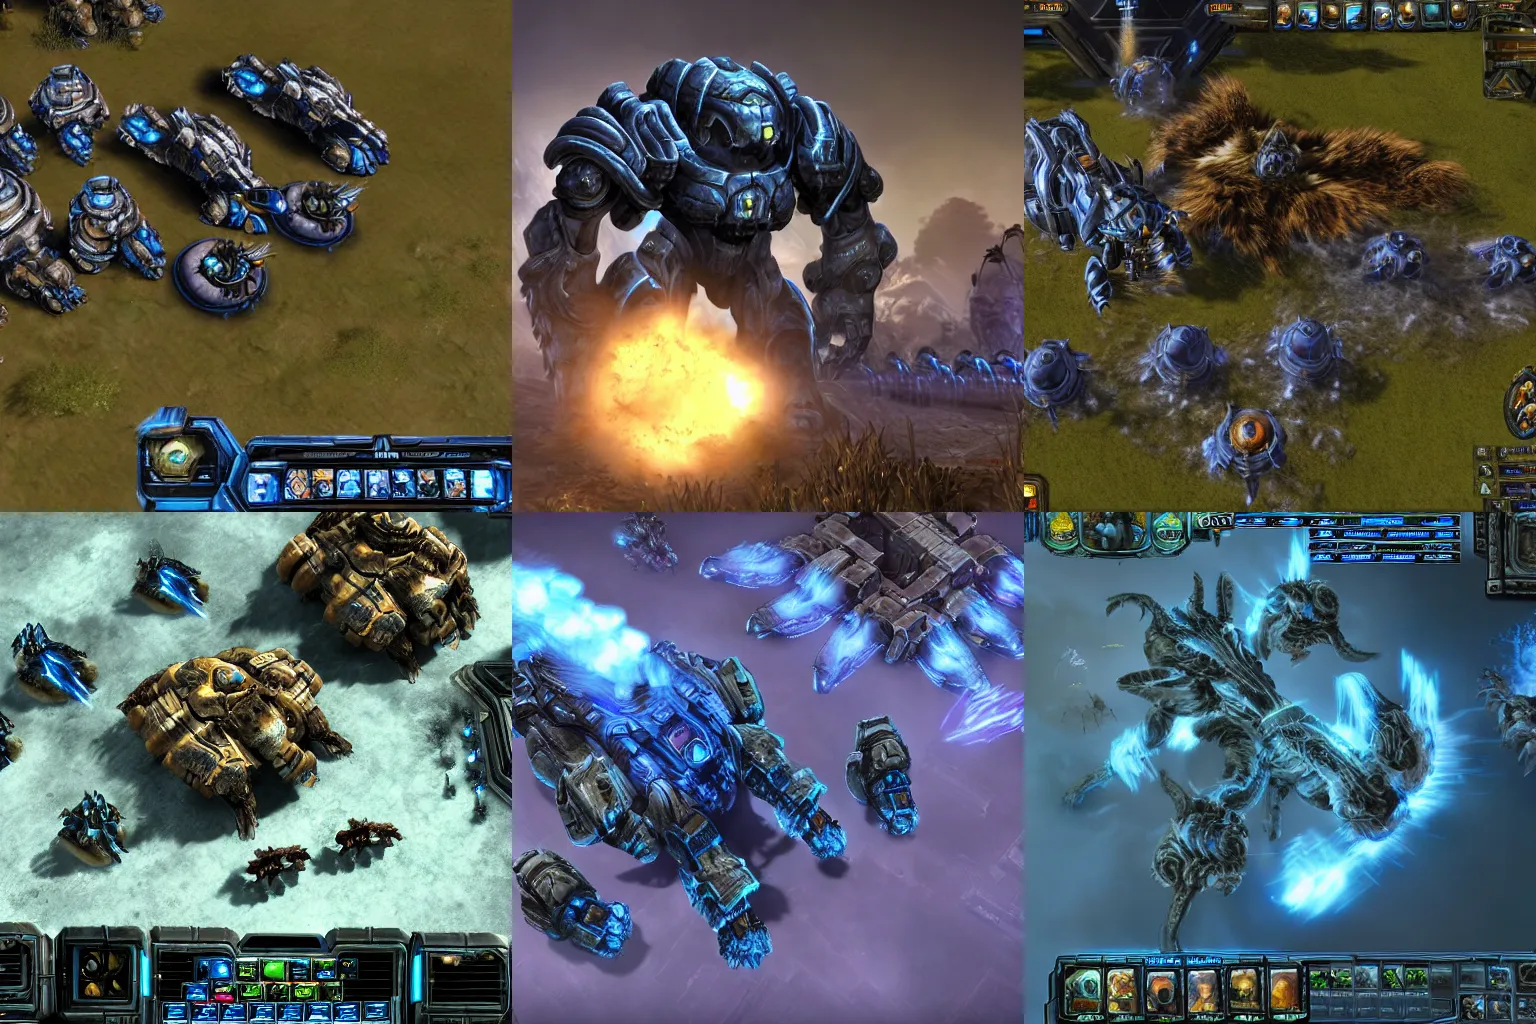 Prompt: screenshot of a giant cat unit in a Starcraft 2 game